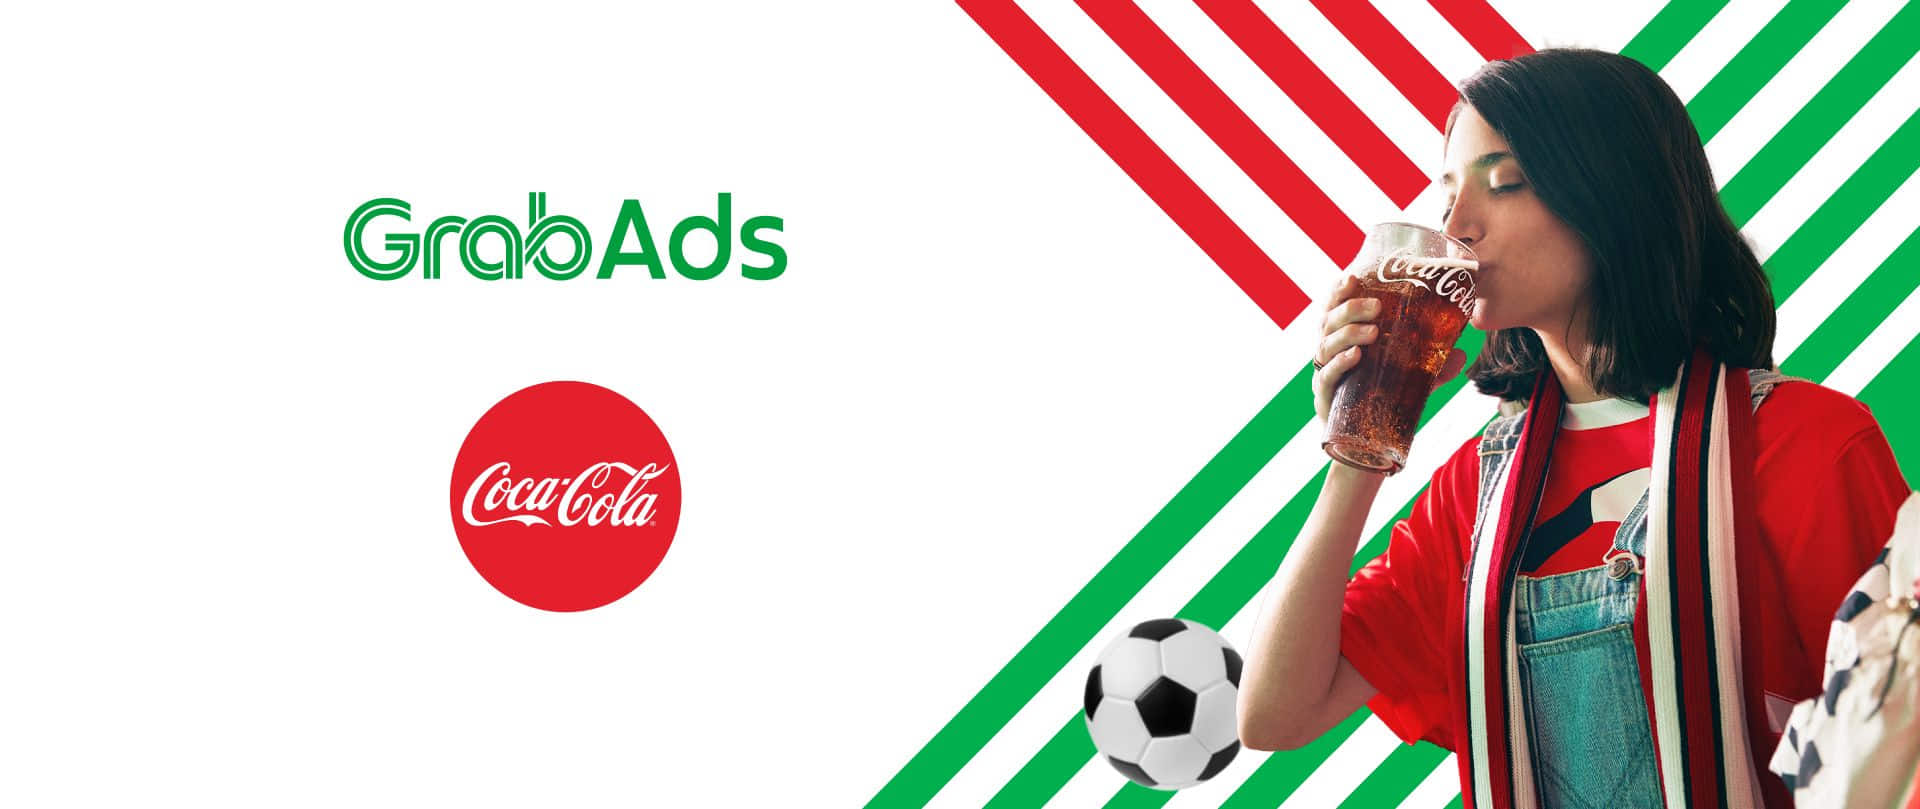 Coca-cola x GrabAds Brand Lift study